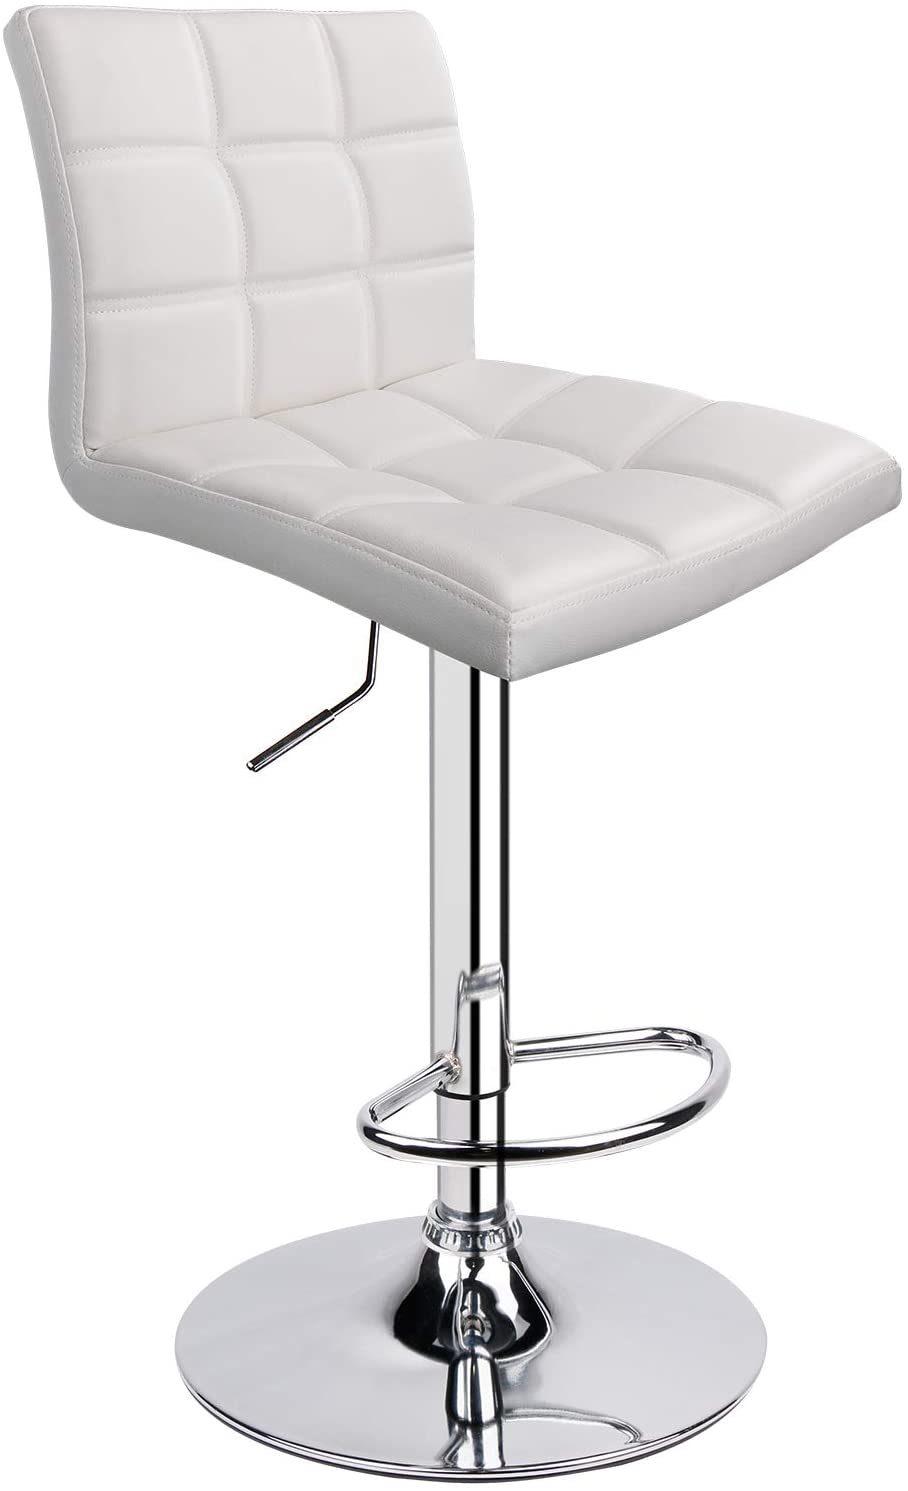 European Crystal Home Acrylic Ghost Bar Chairs Outdoor High Stool Stylish Simple Bar Chair